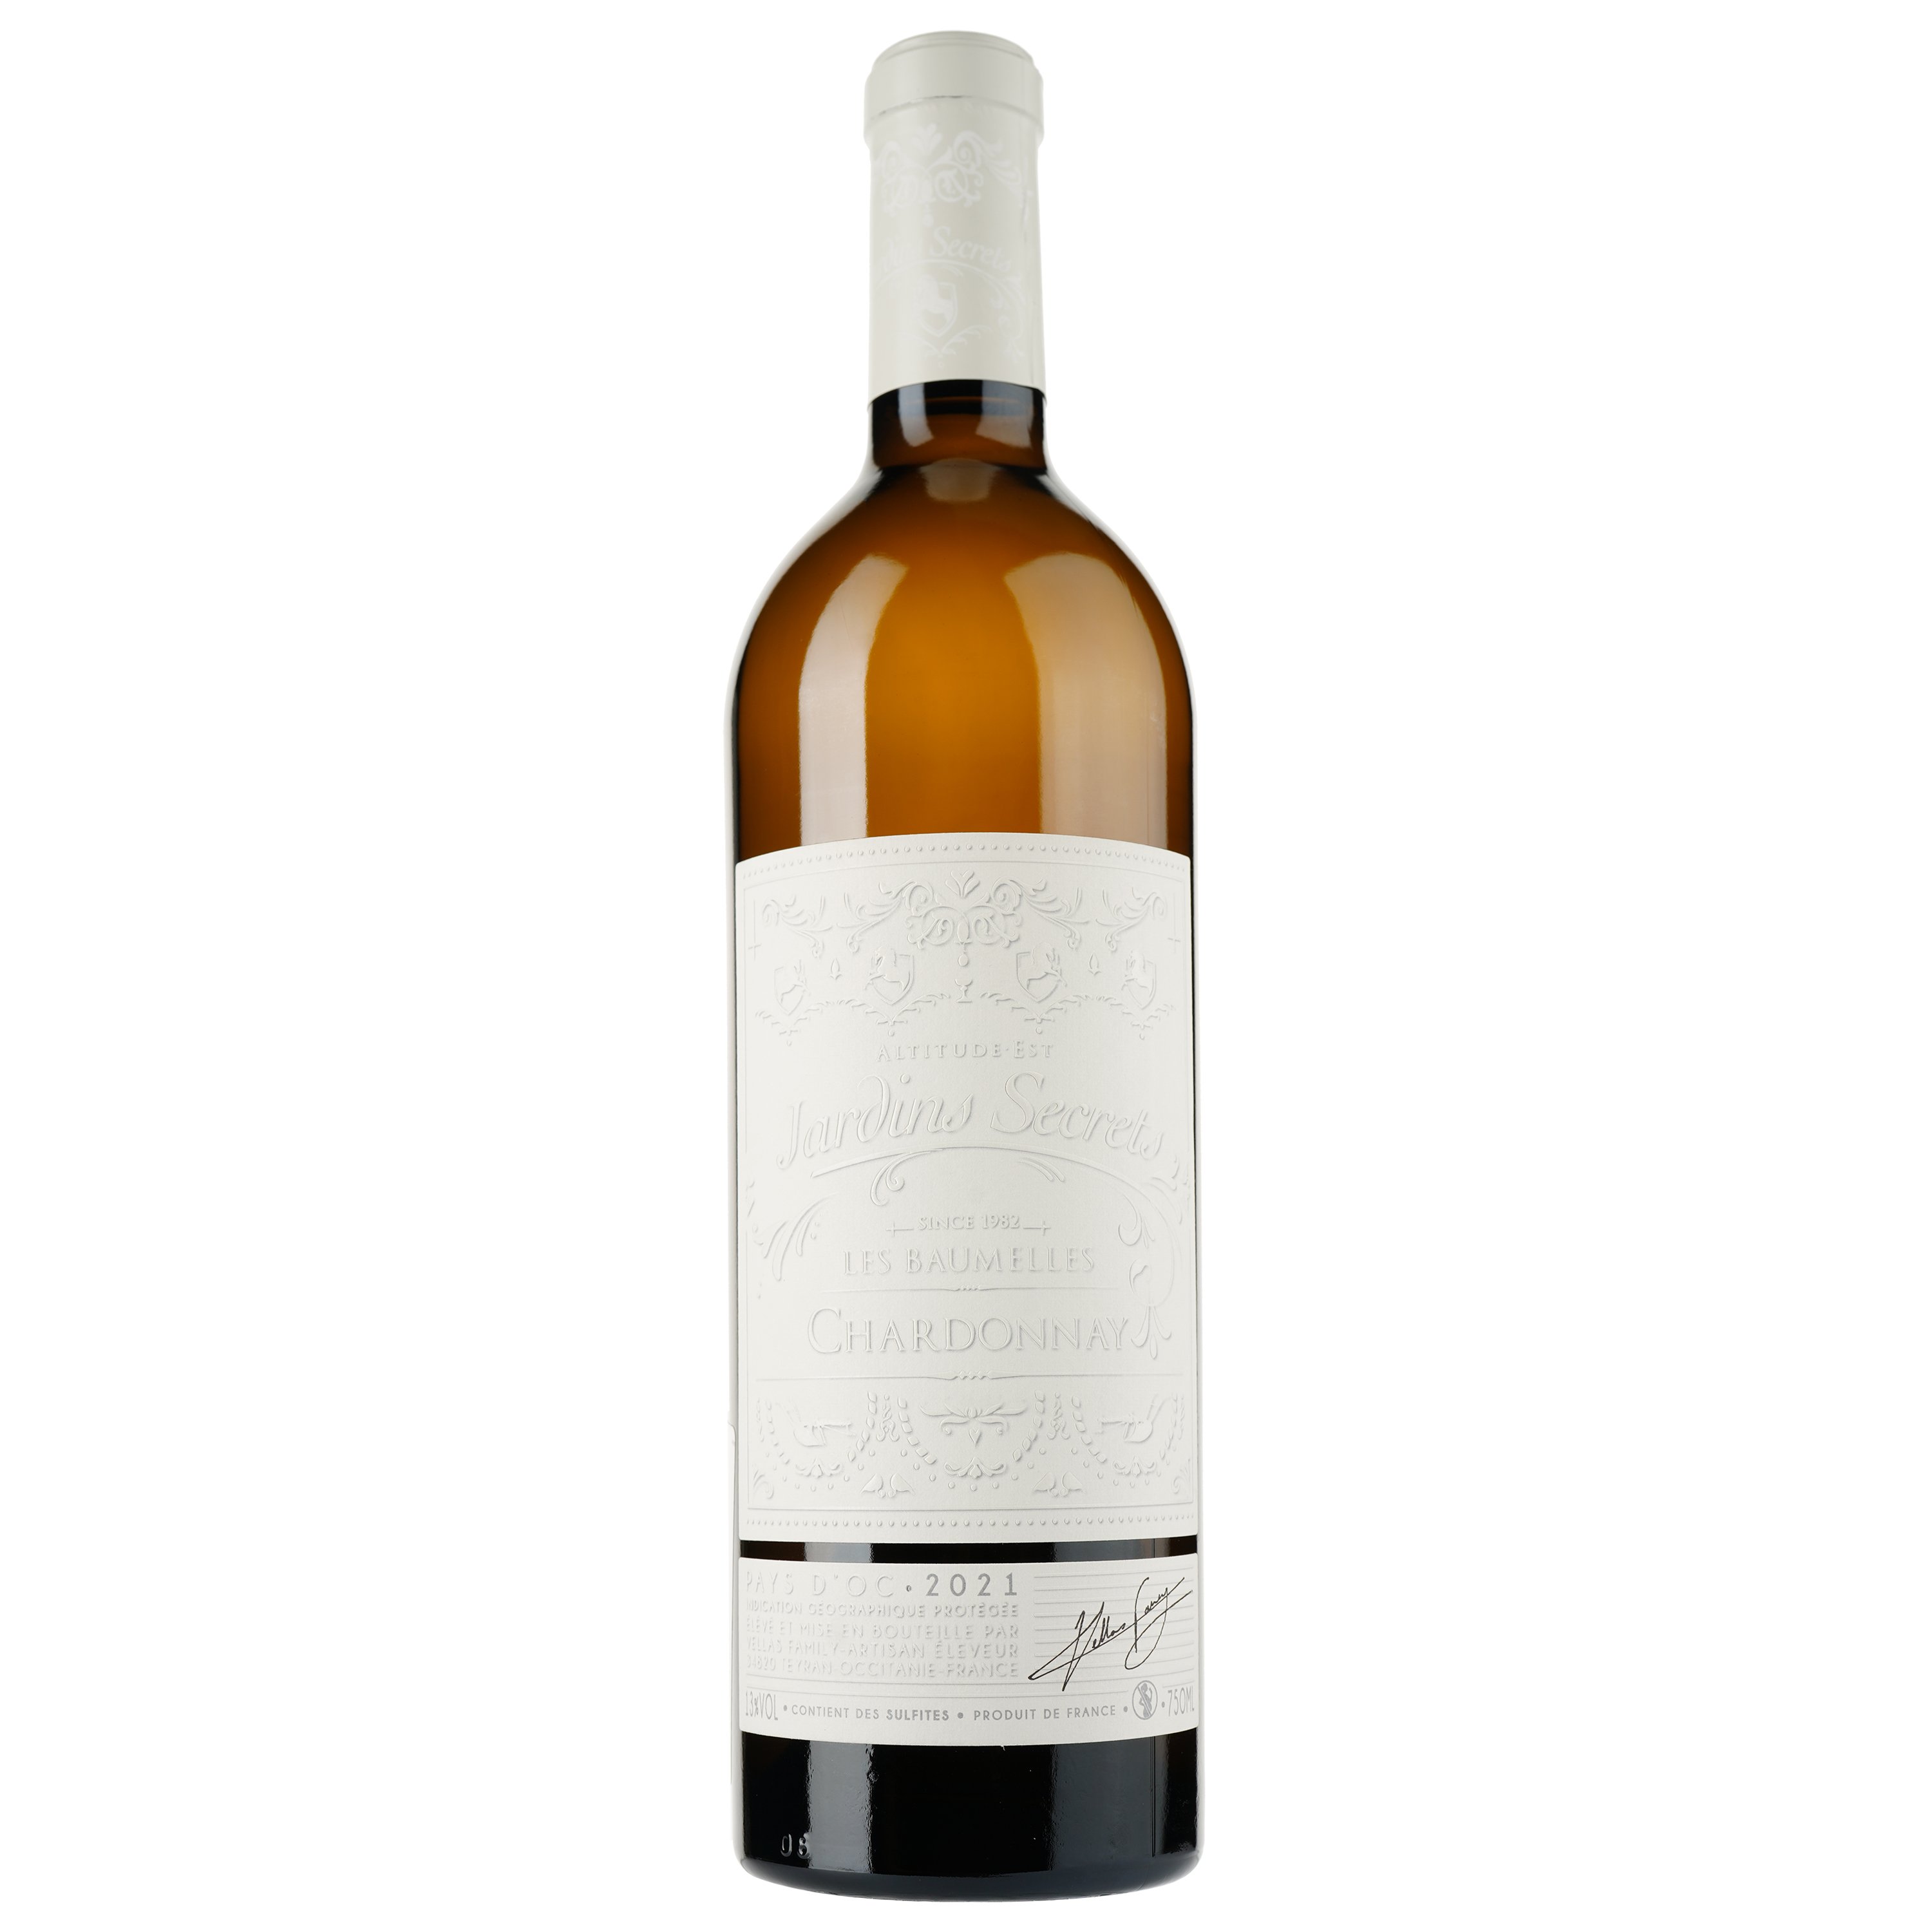 Вино Jardins Secrets Chardonnay 2021 IGP Pays D'Oc, біле, сухе, 0,75 л - фото 1